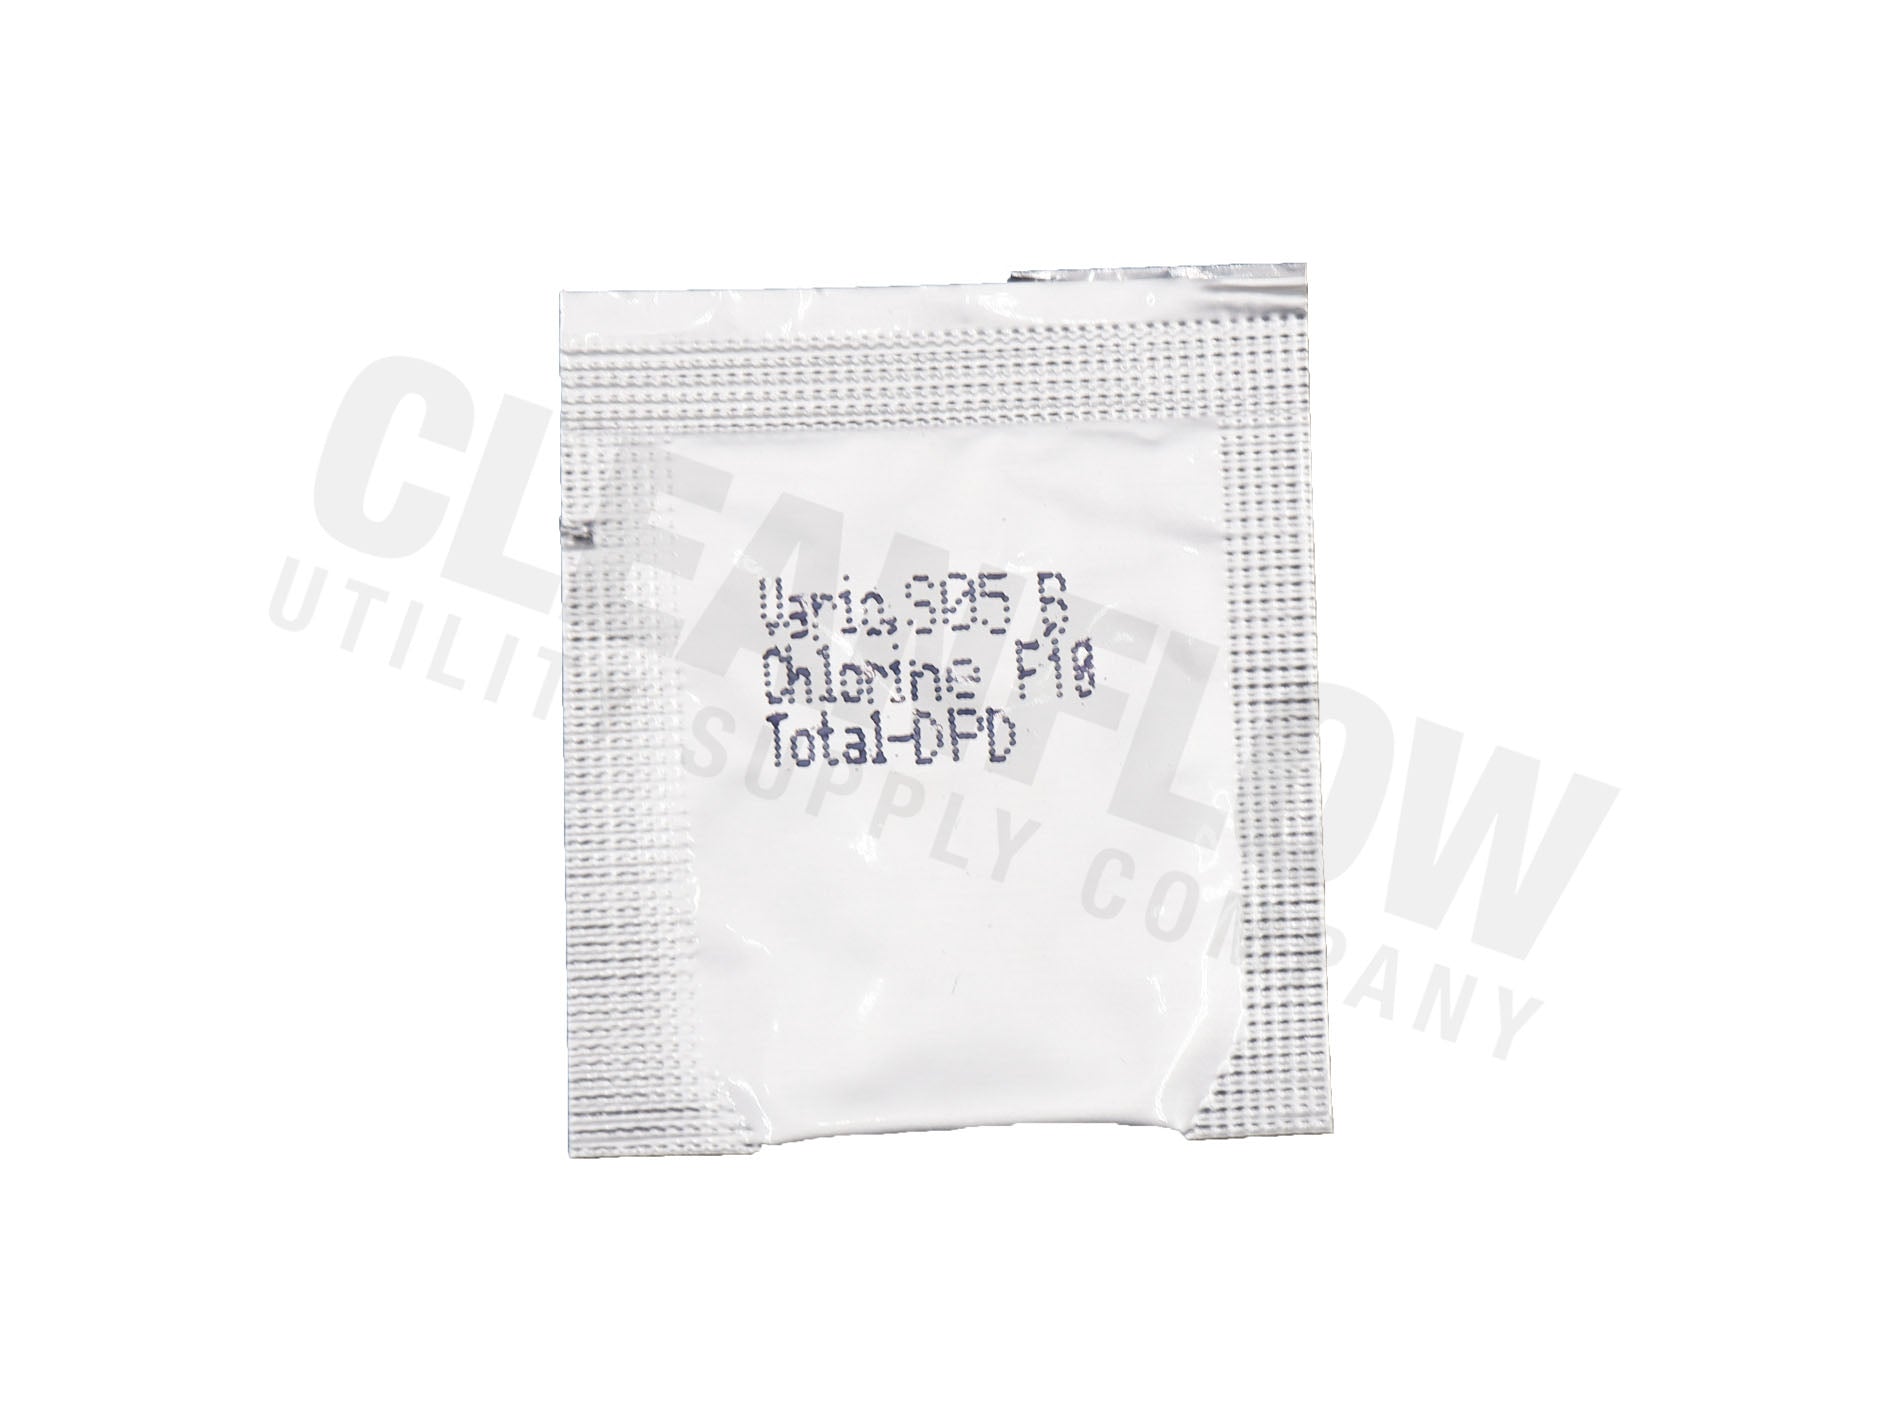 Vario 10 ml DPD Total Chlorine Powder Pillows | 1000/pk Reagents - Cleanflow